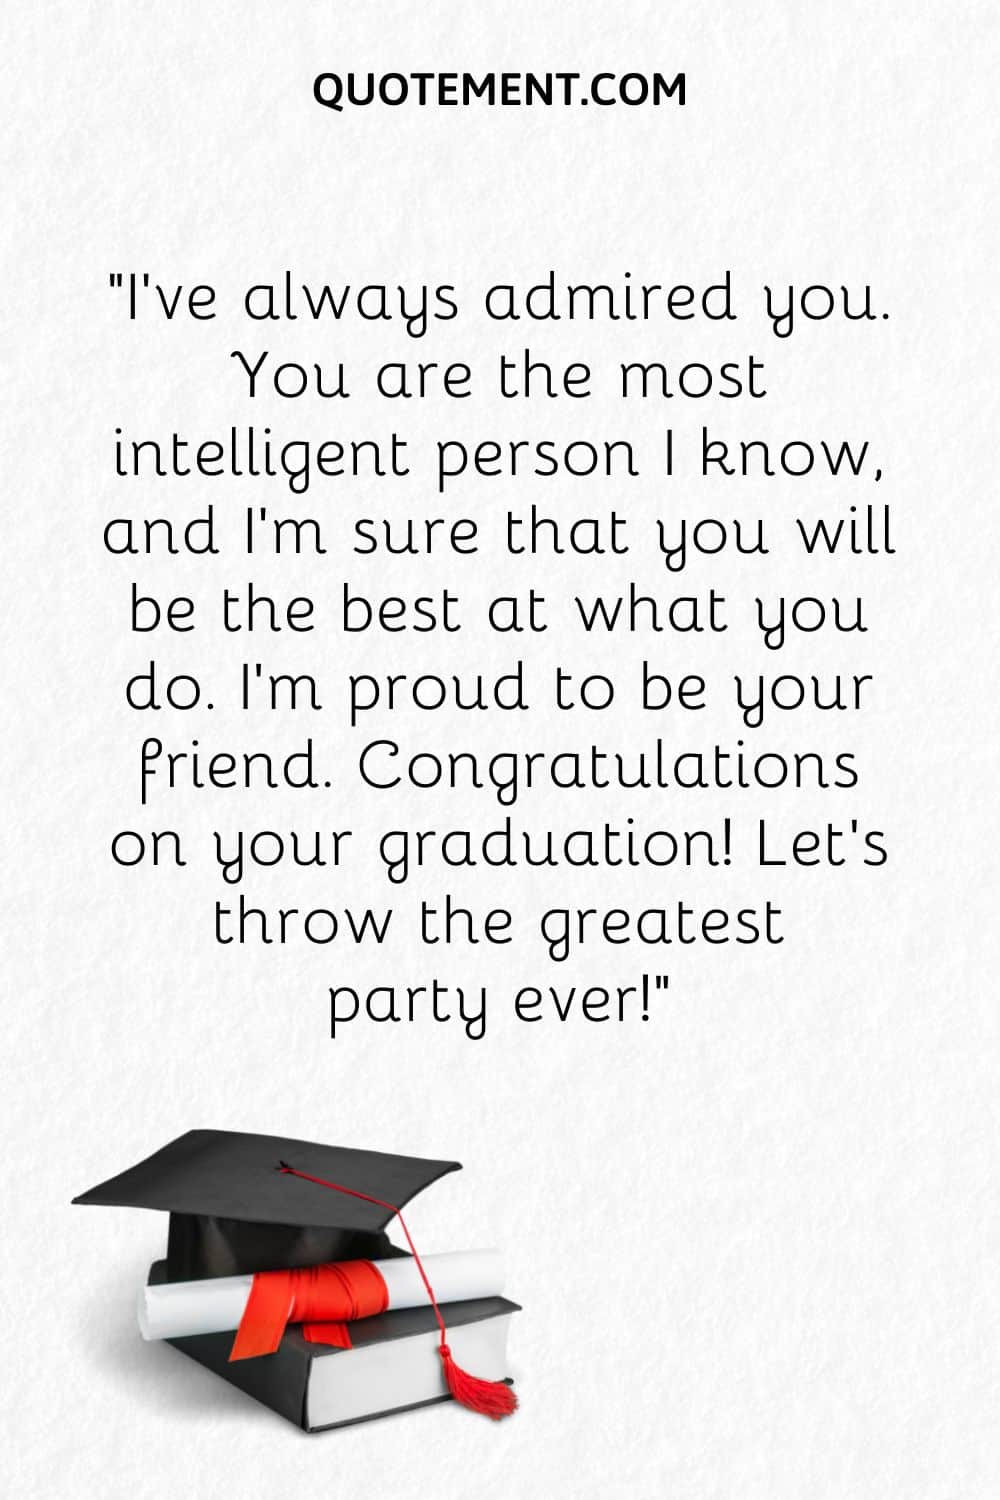 Inspirational congratulations on graduation wish, book, diploma and graduation hat.
